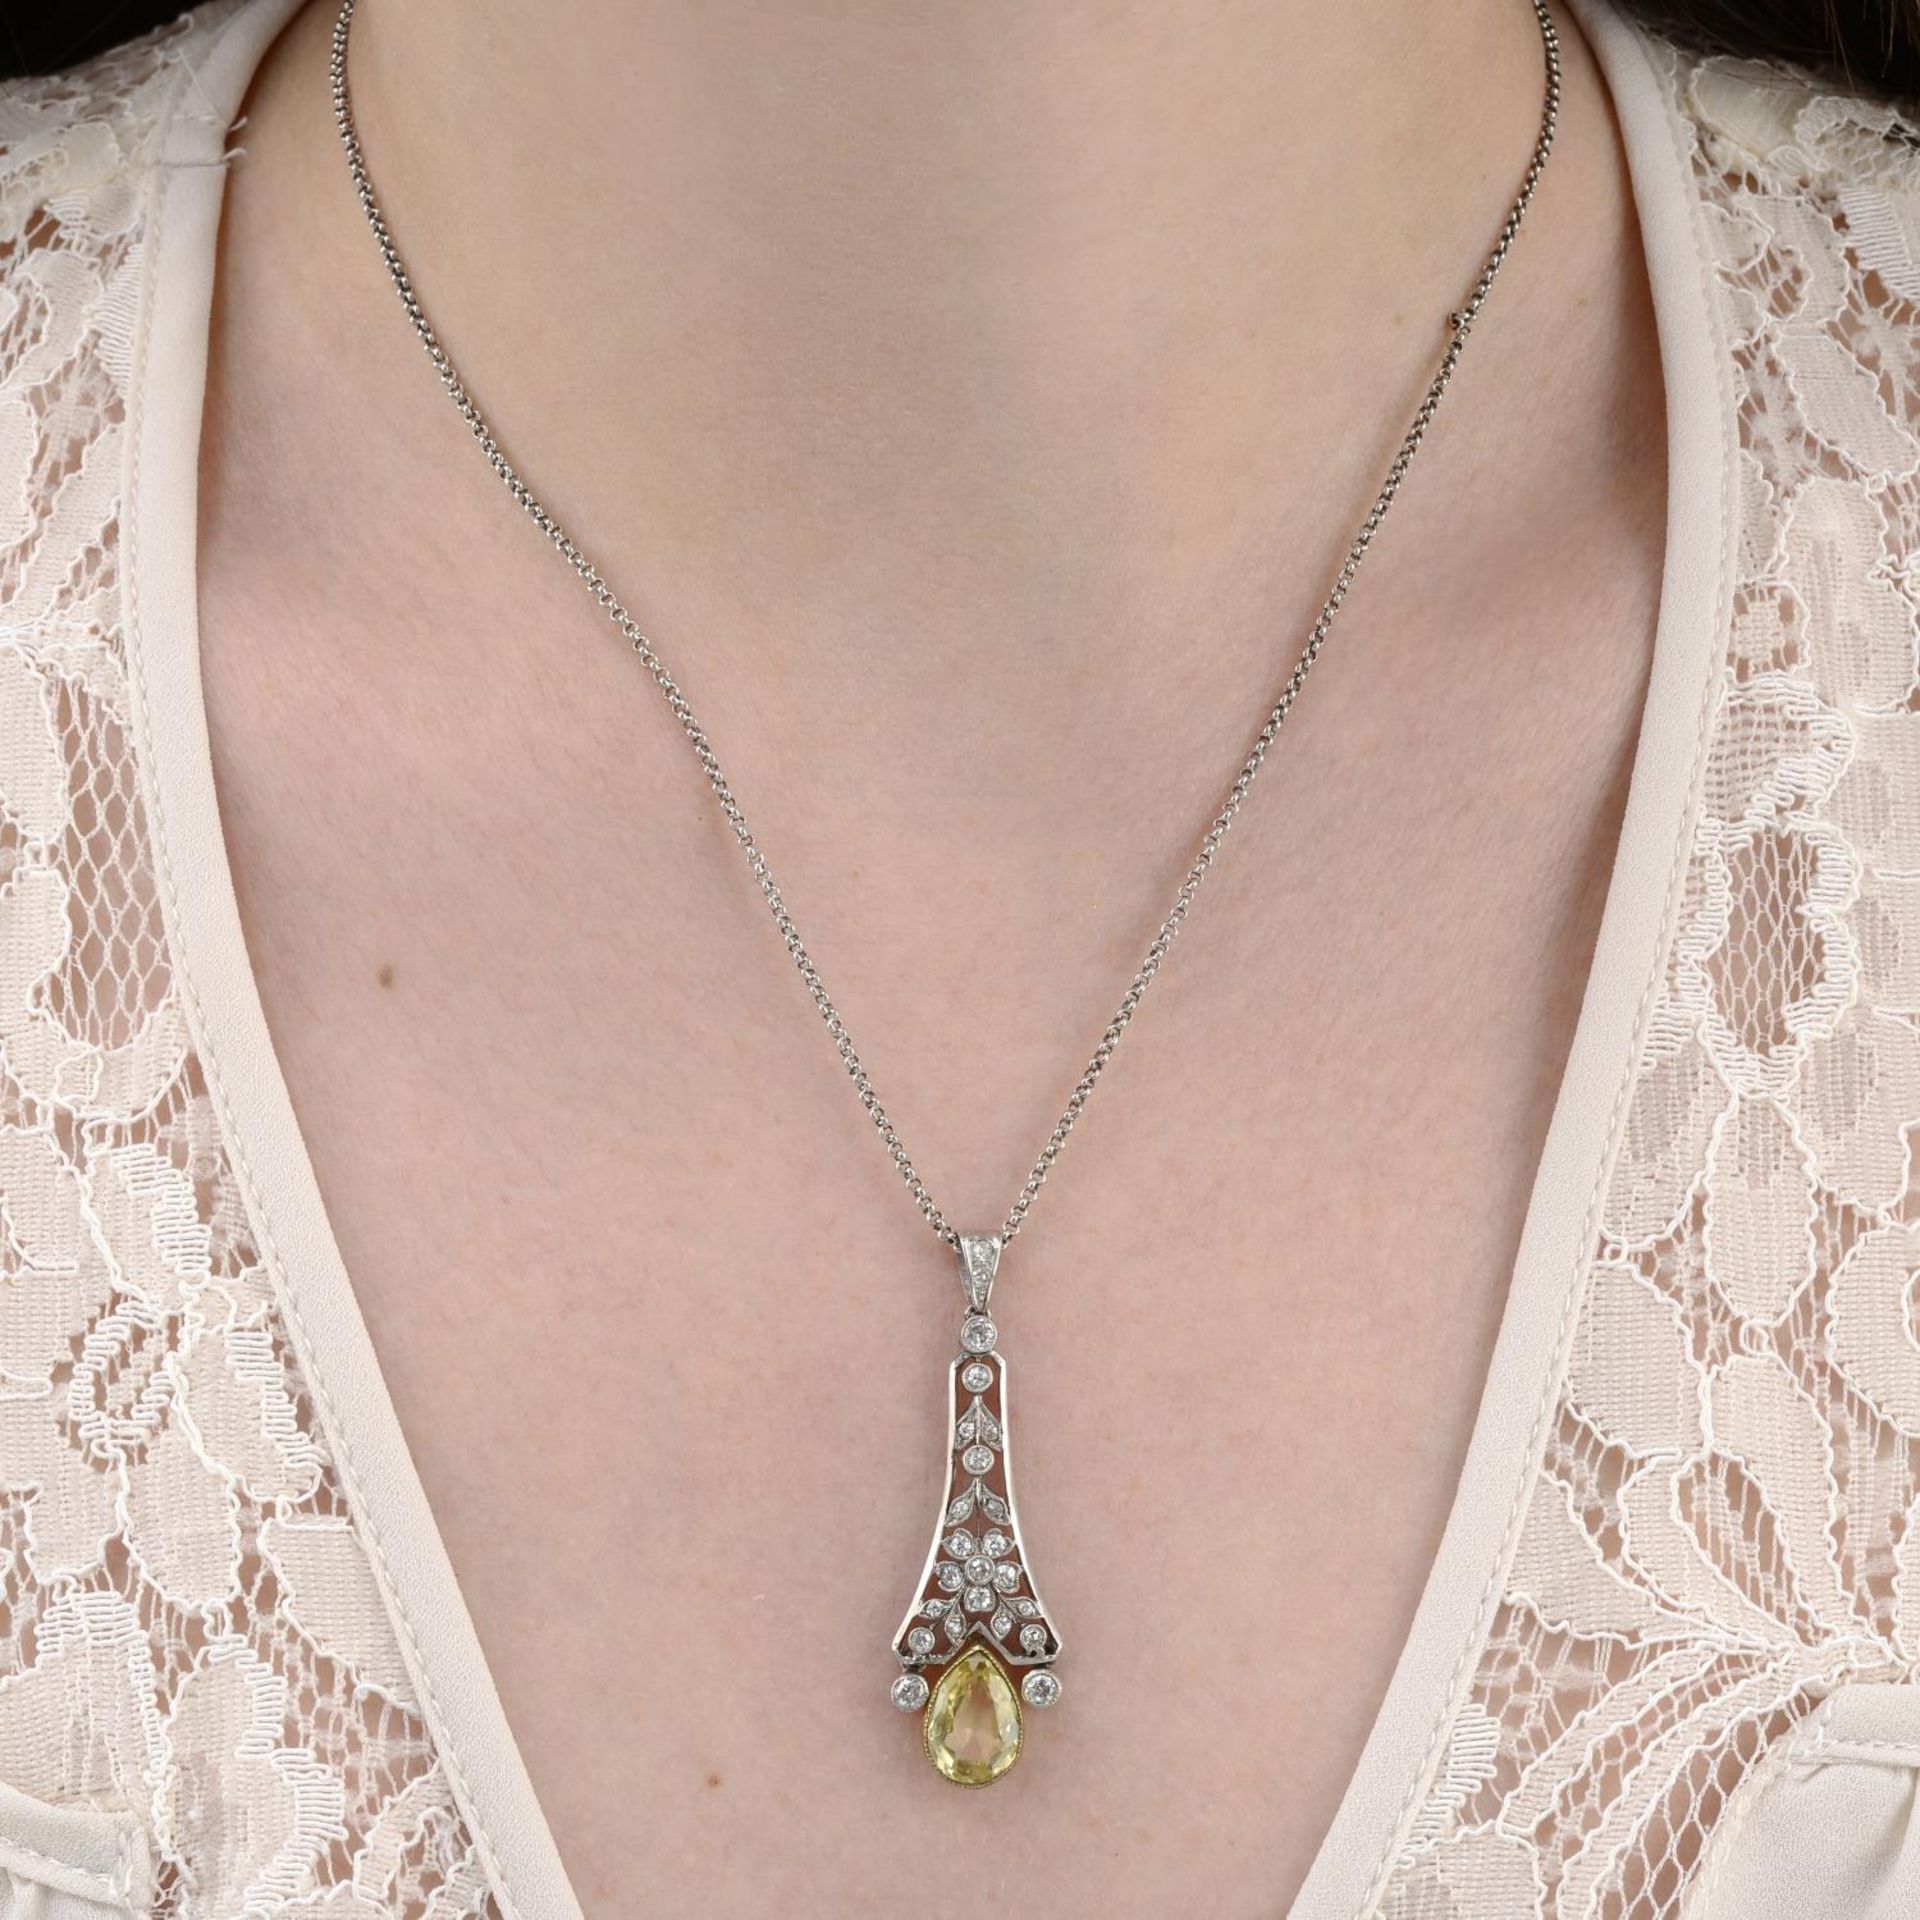 A Sri Lankan yellow sapphire and old-cut pendant,